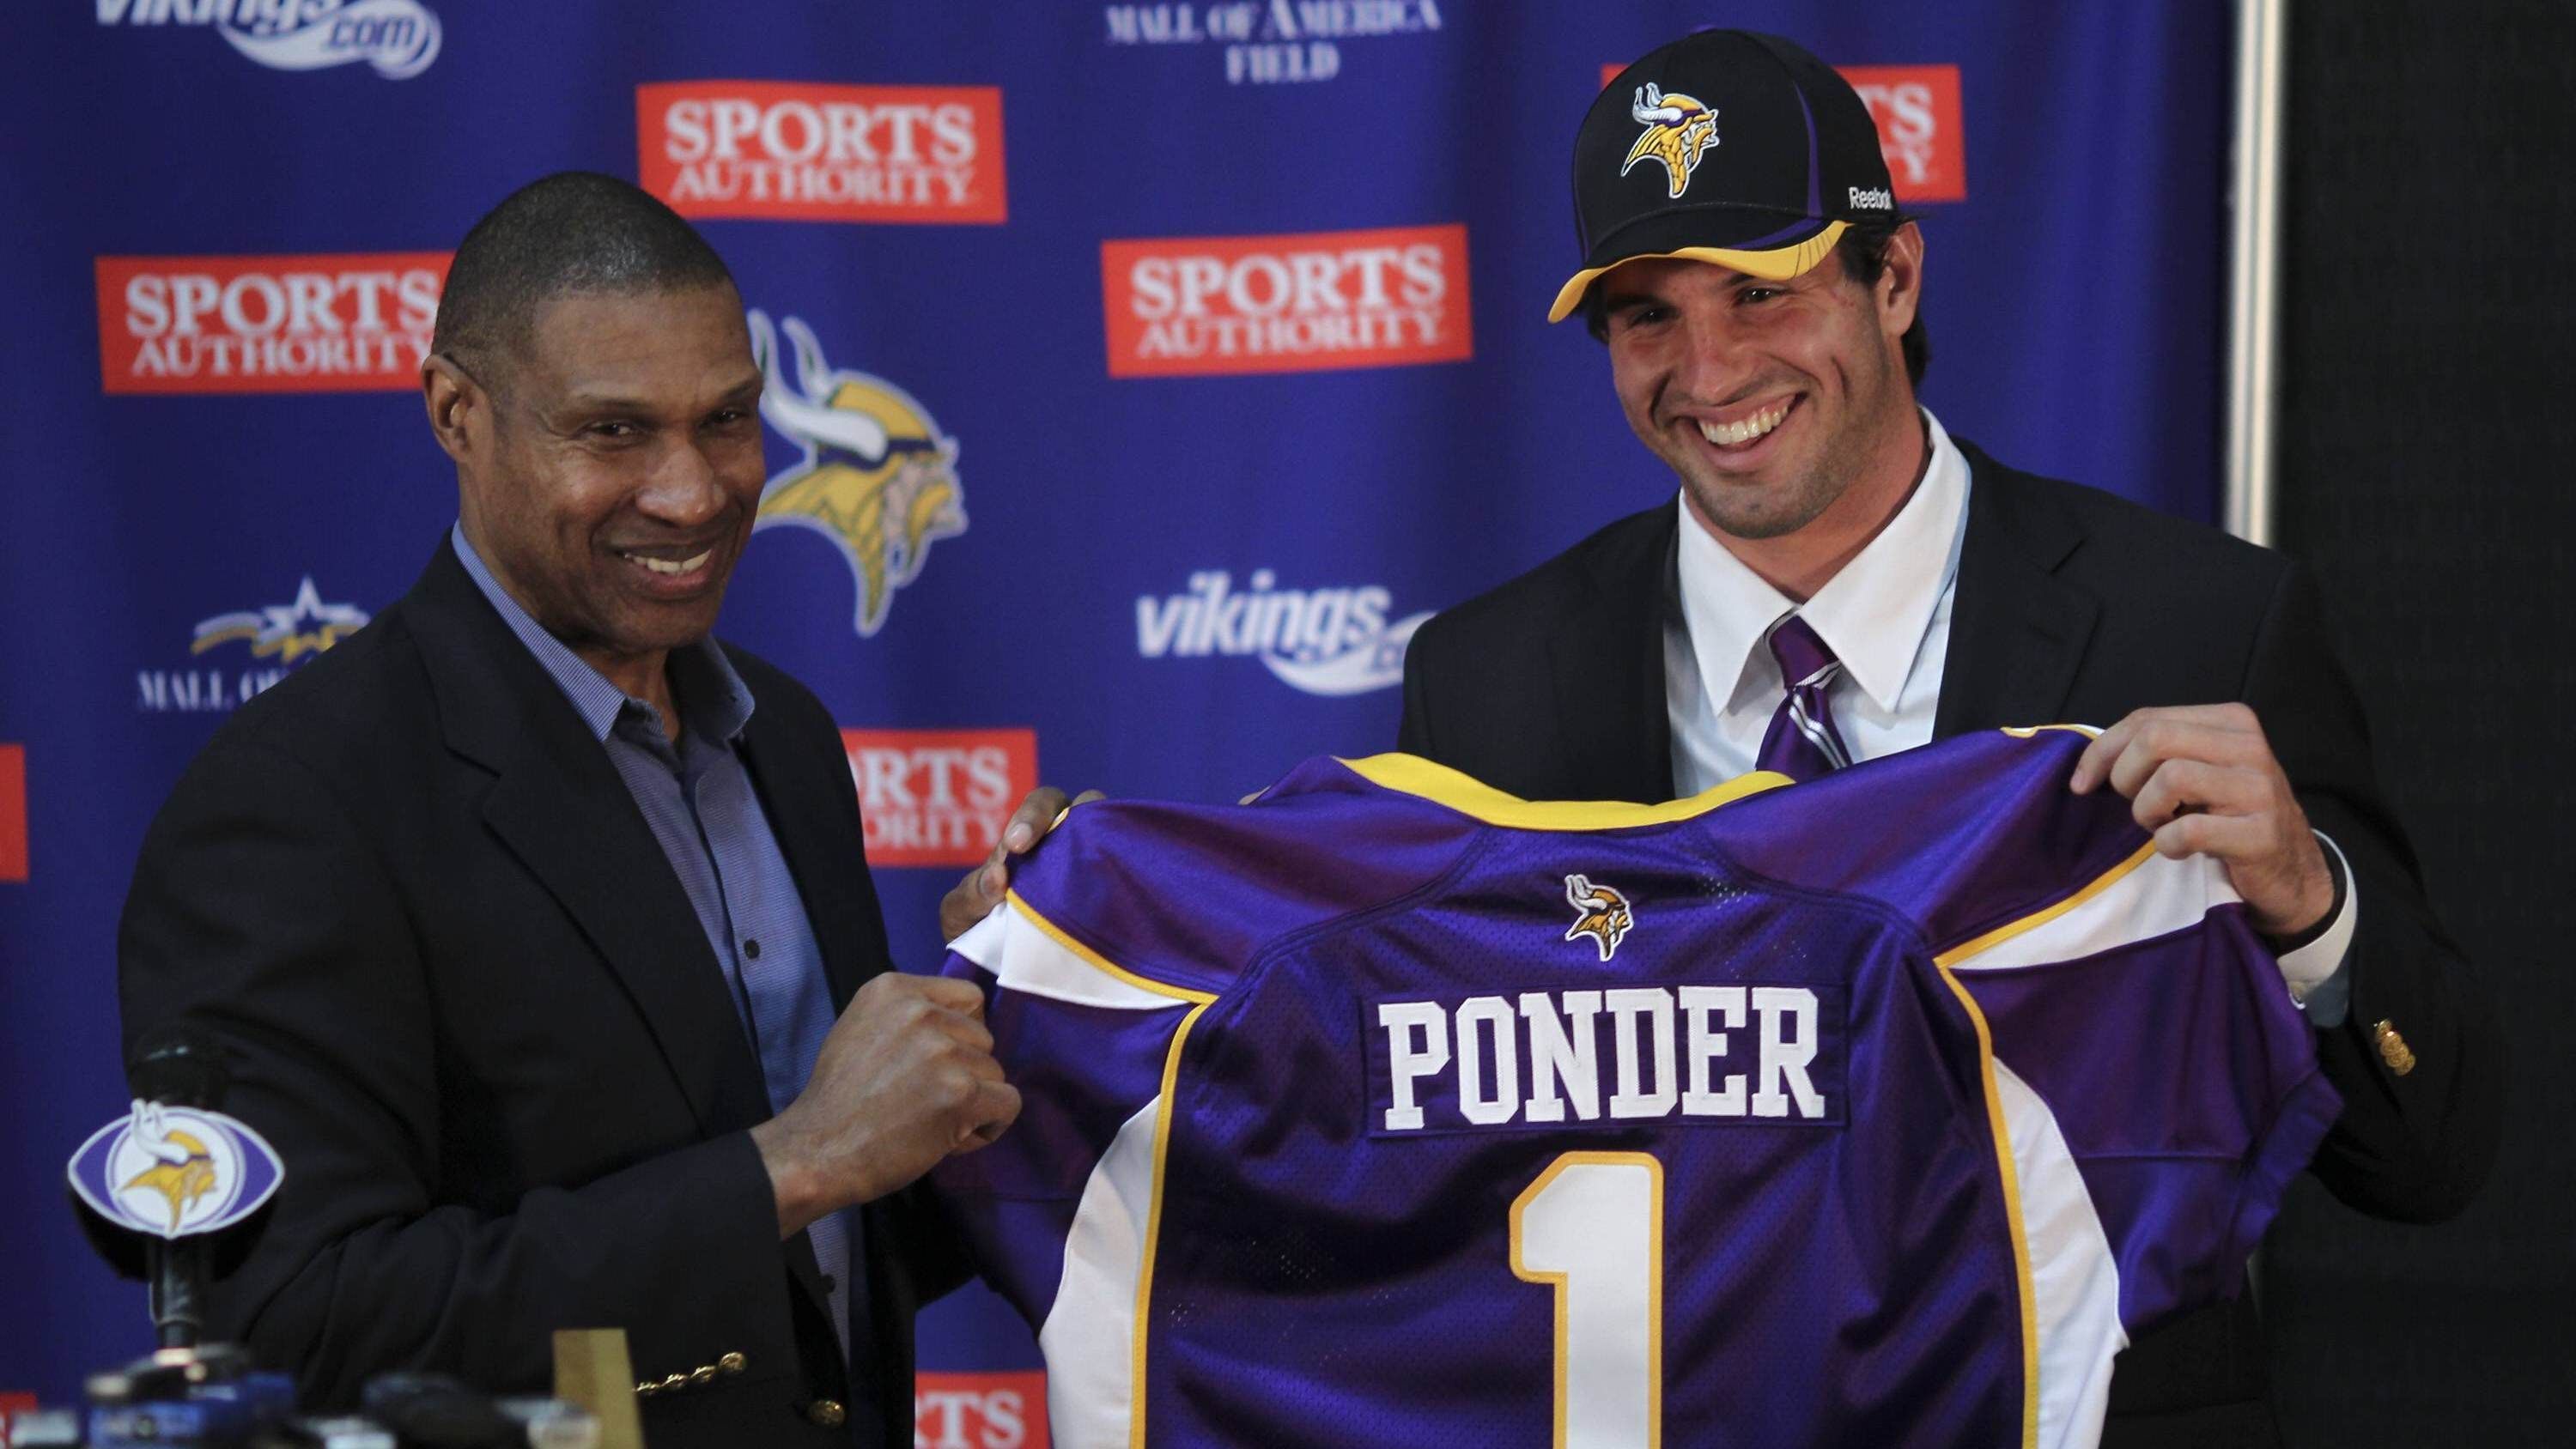 
                <strong>Christian Ponder</strong><br>
                 - Draft: 2011 an 12. Stelle von den Minnesota Vikings - Stationen: Minnesota Vikings 2011 bis 2014, Oakland Raiders 2015, Denver Broncos 2015, San Francisco 49ers 2016 - Karriere 2016 beendet
              